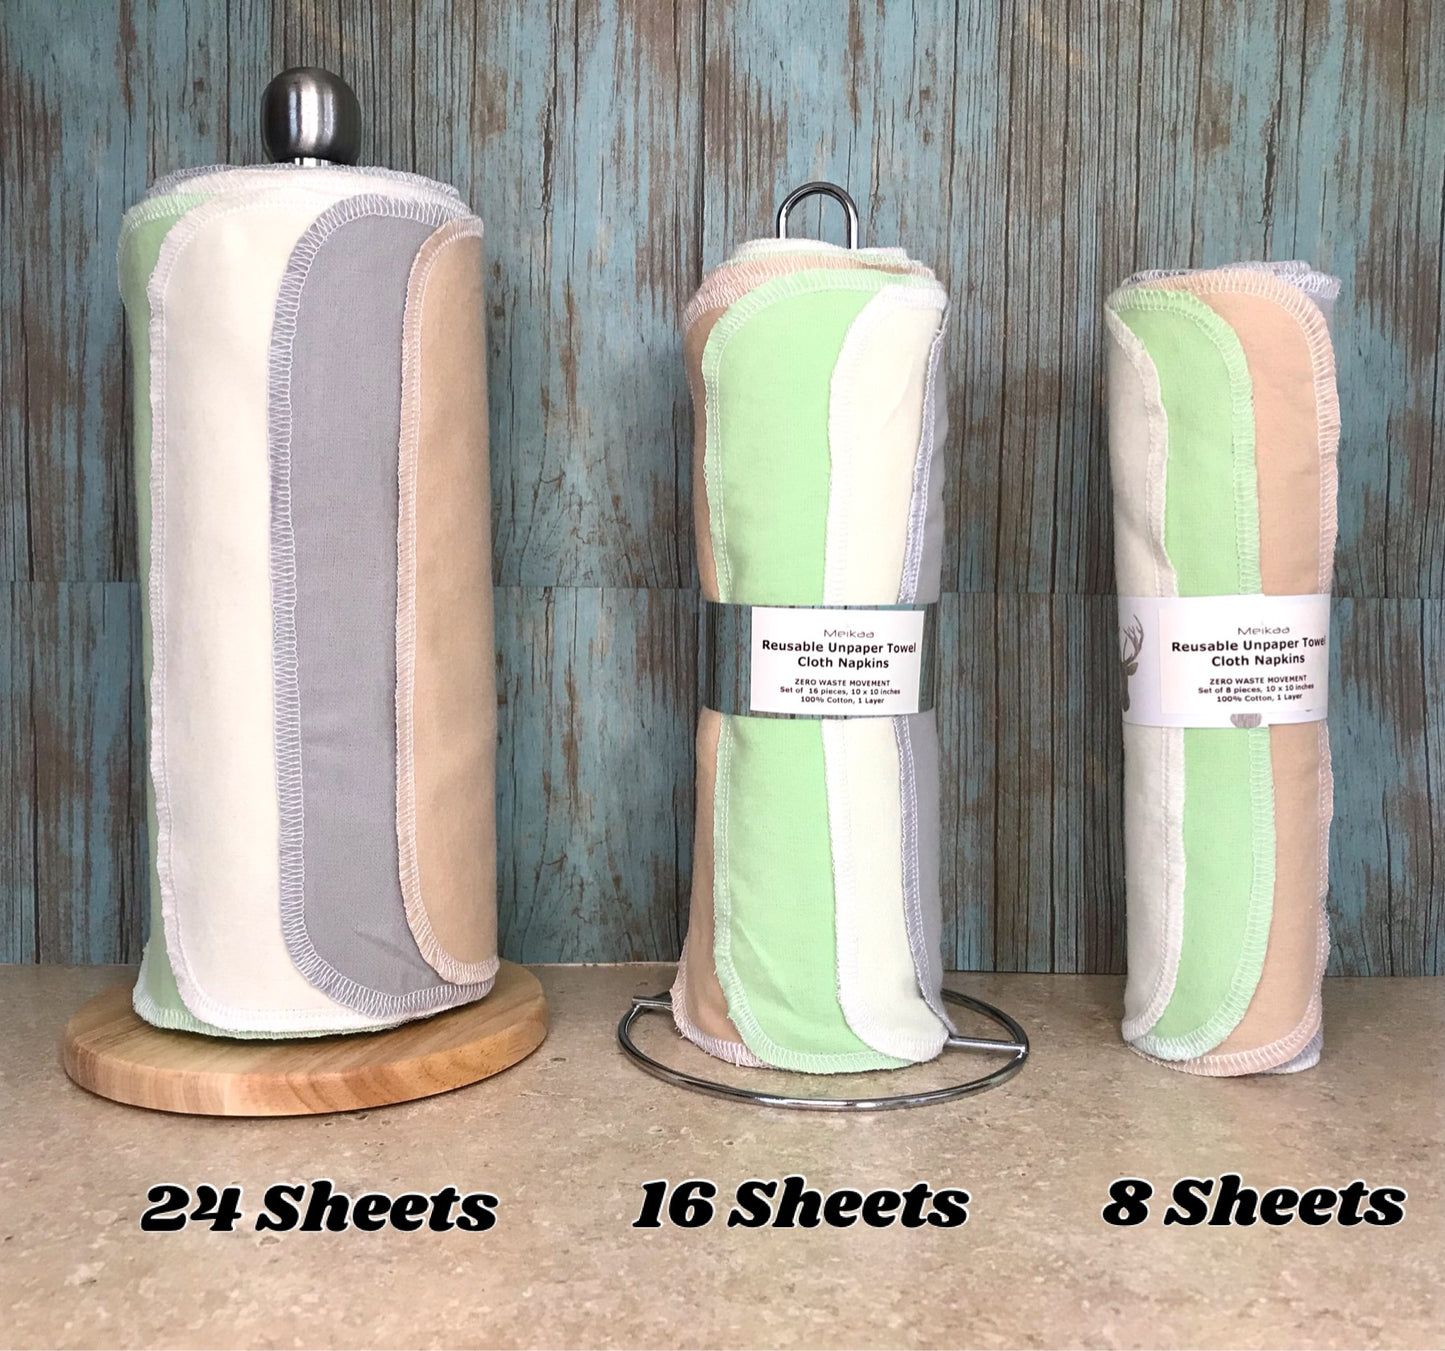 1 layer Unpaper towel 100% Cotton